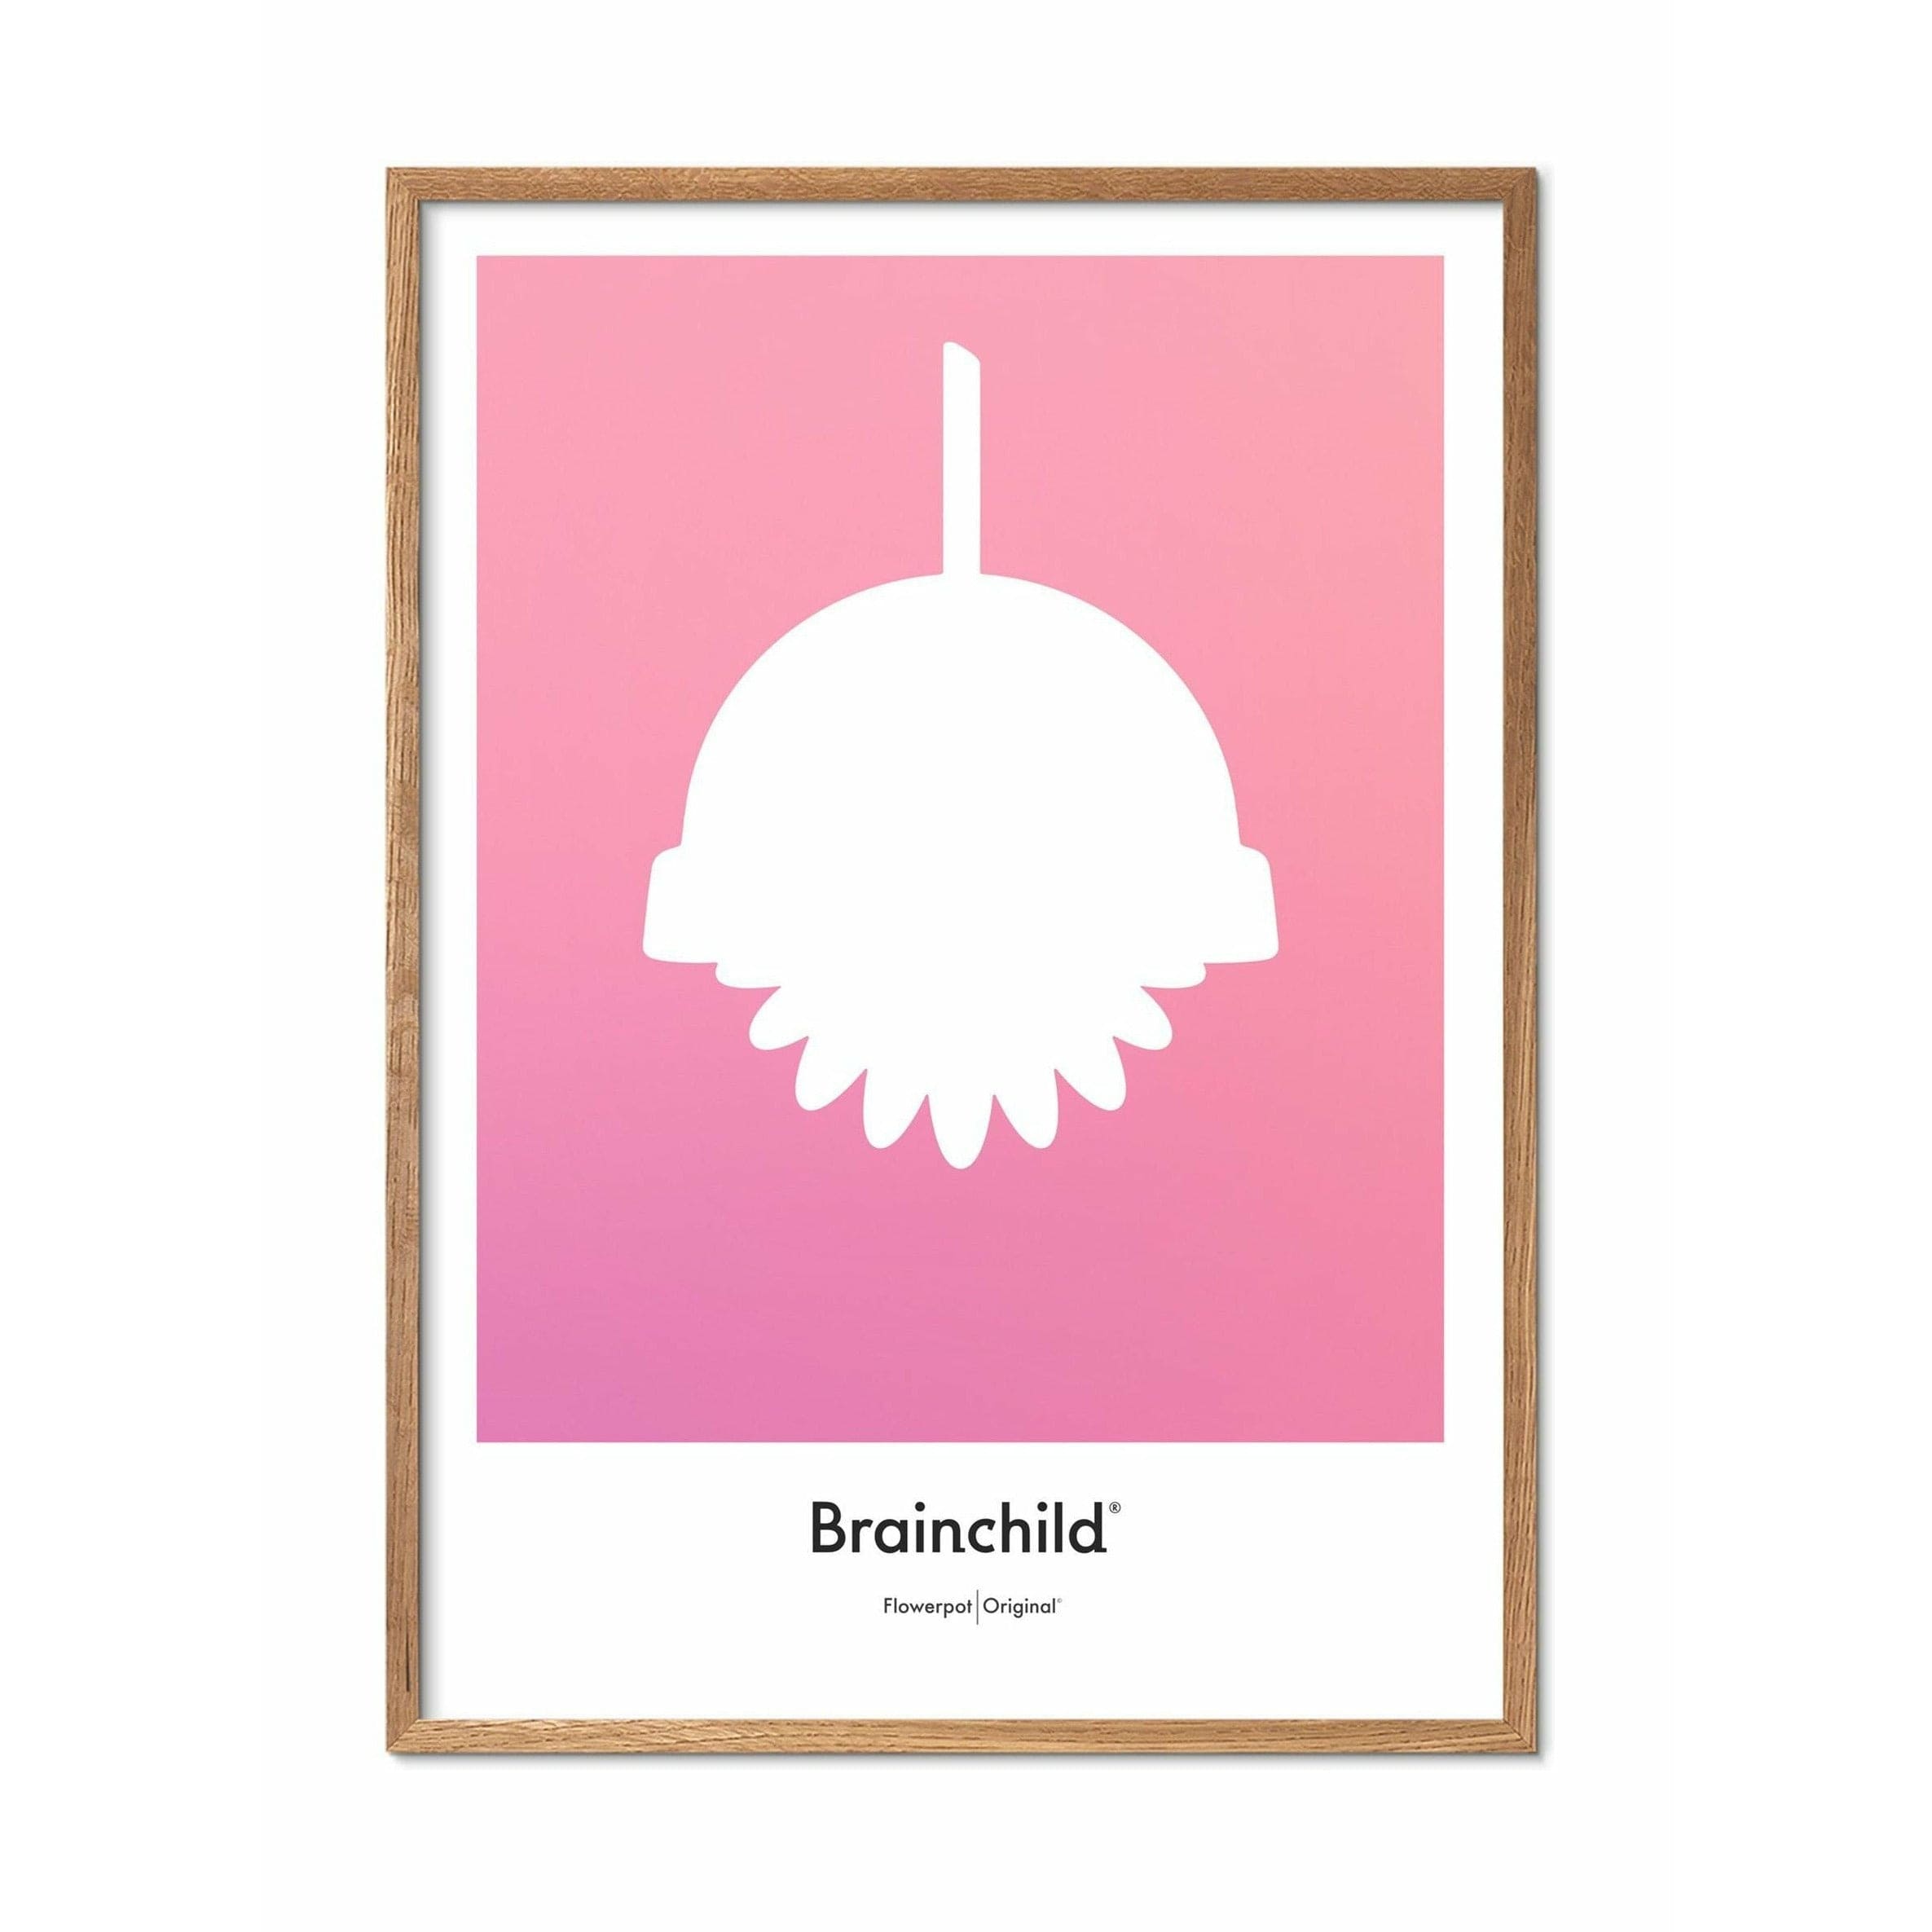 Brainchild Flowerpot Design Icon Poster, Light Wood Frame A5, Pink